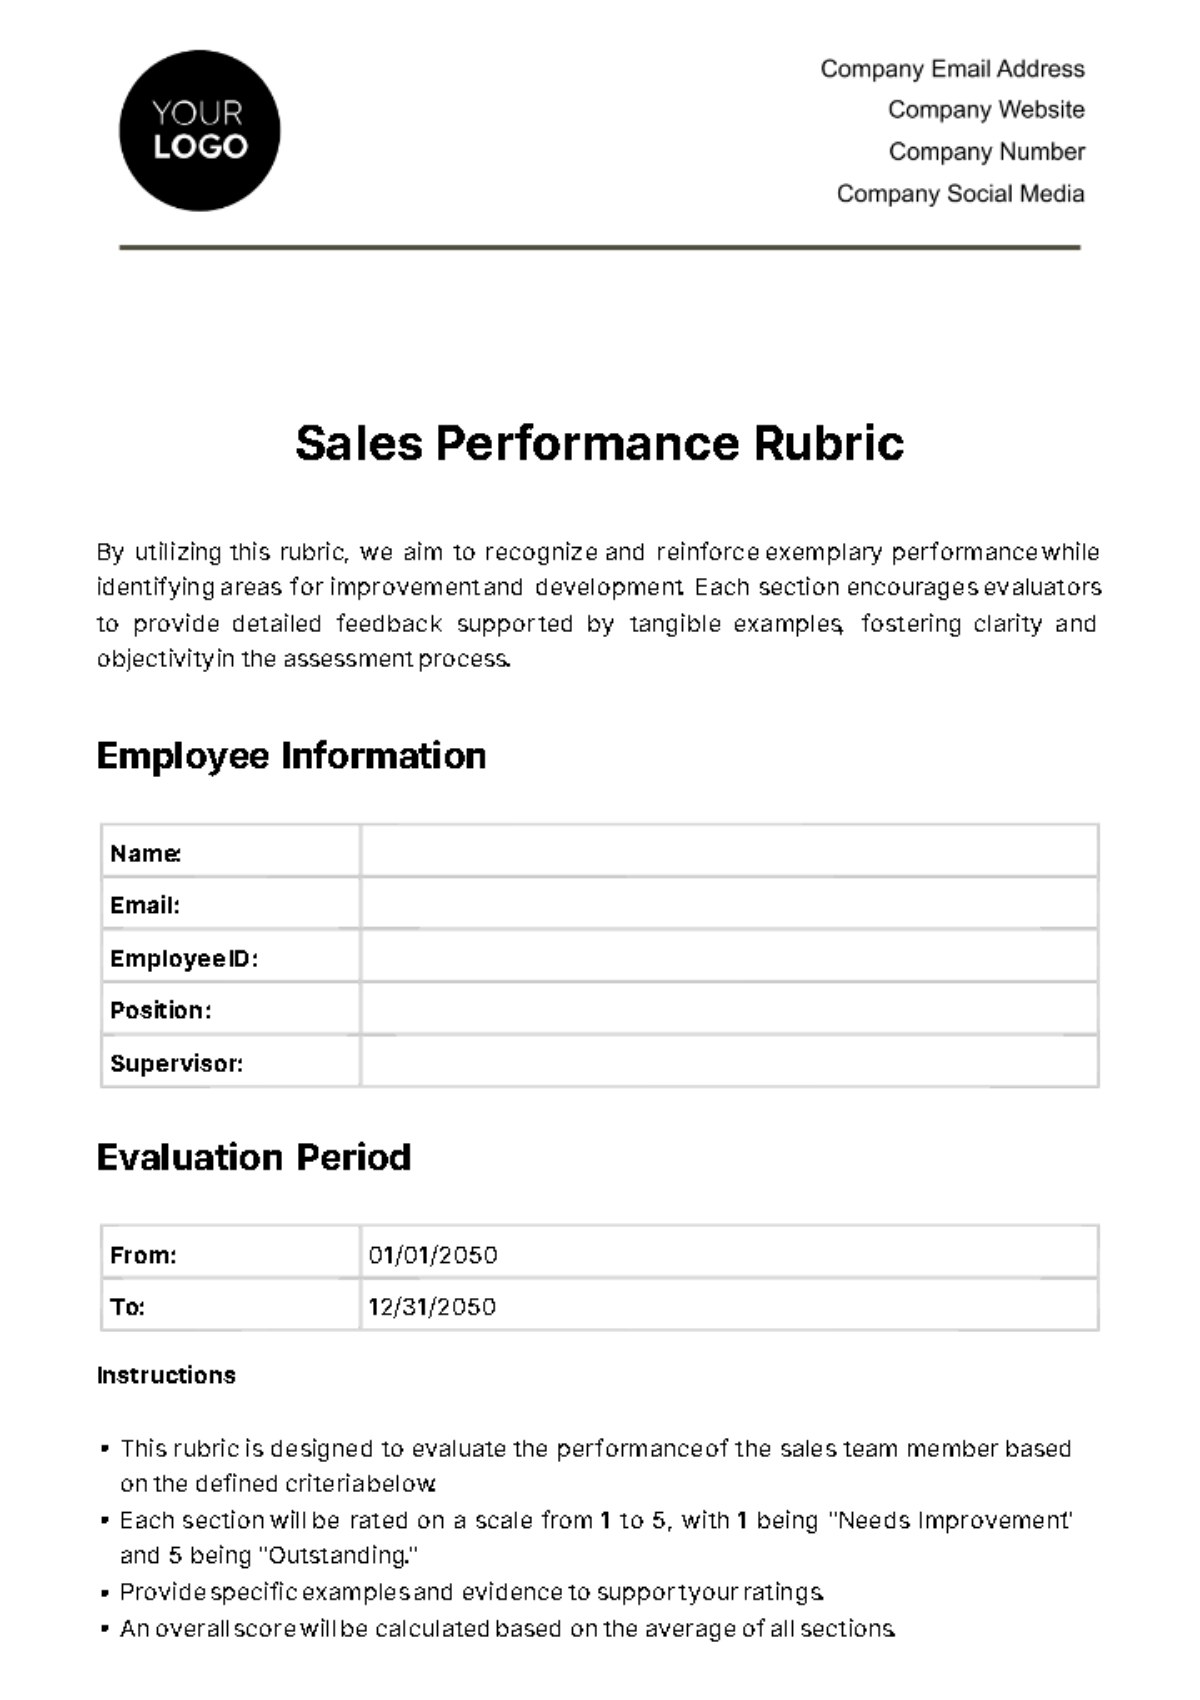 Sales Performance Rubric Template